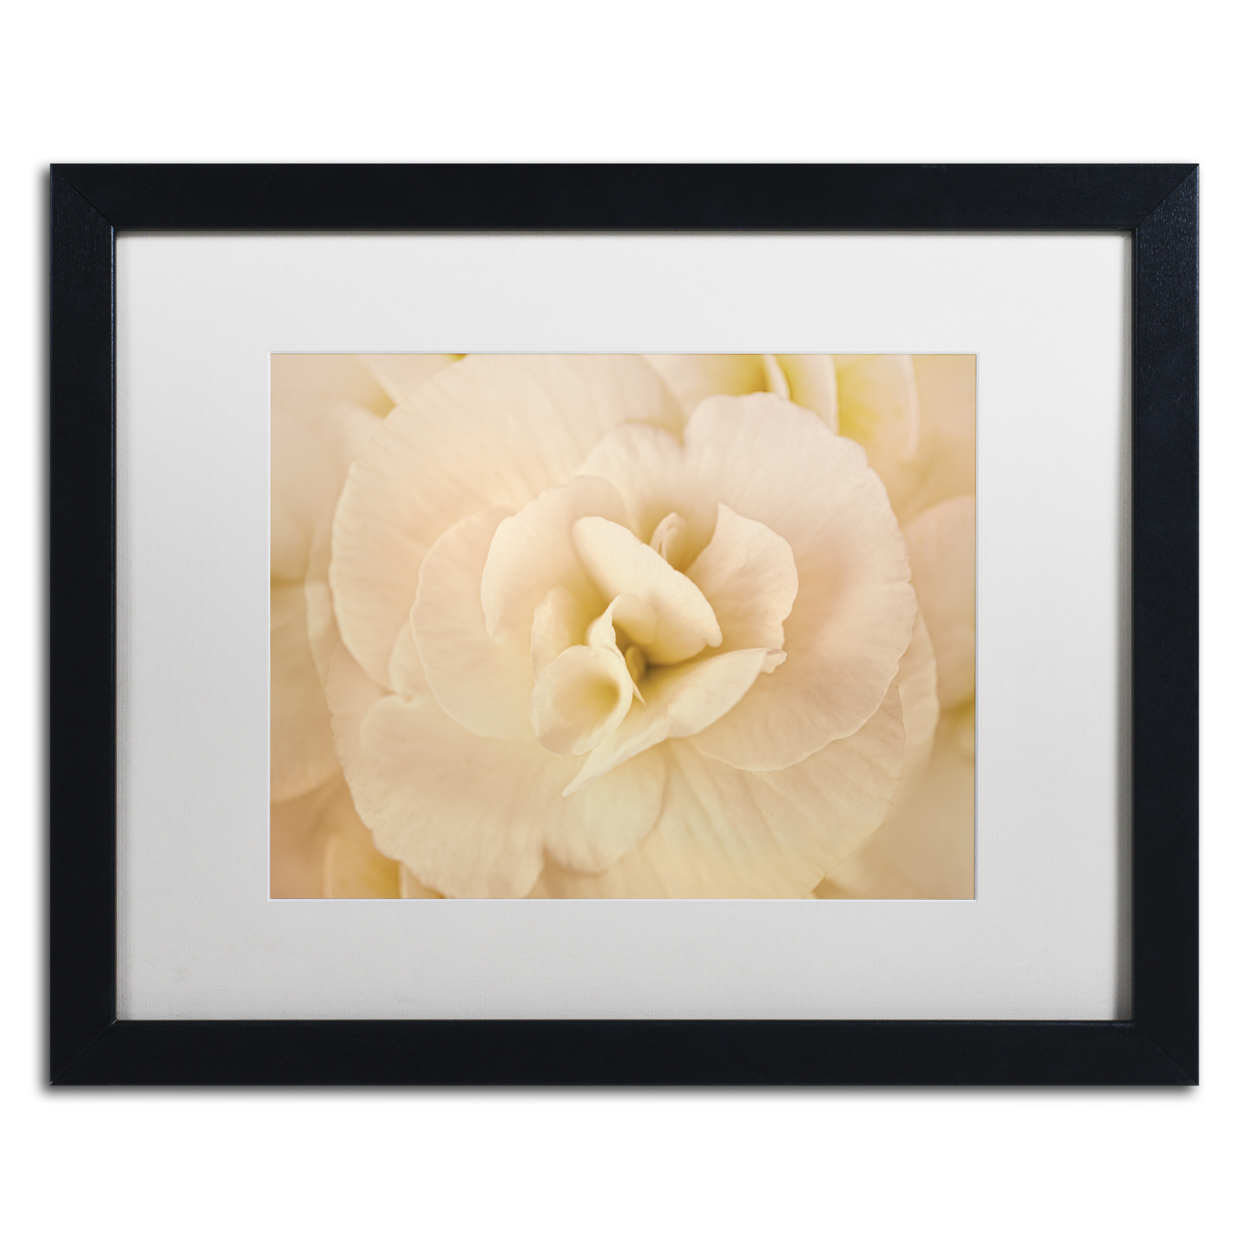 Cora Niele 'Amber Begonia Flower' Black Wooden Framed Art 18 X 22 Inches